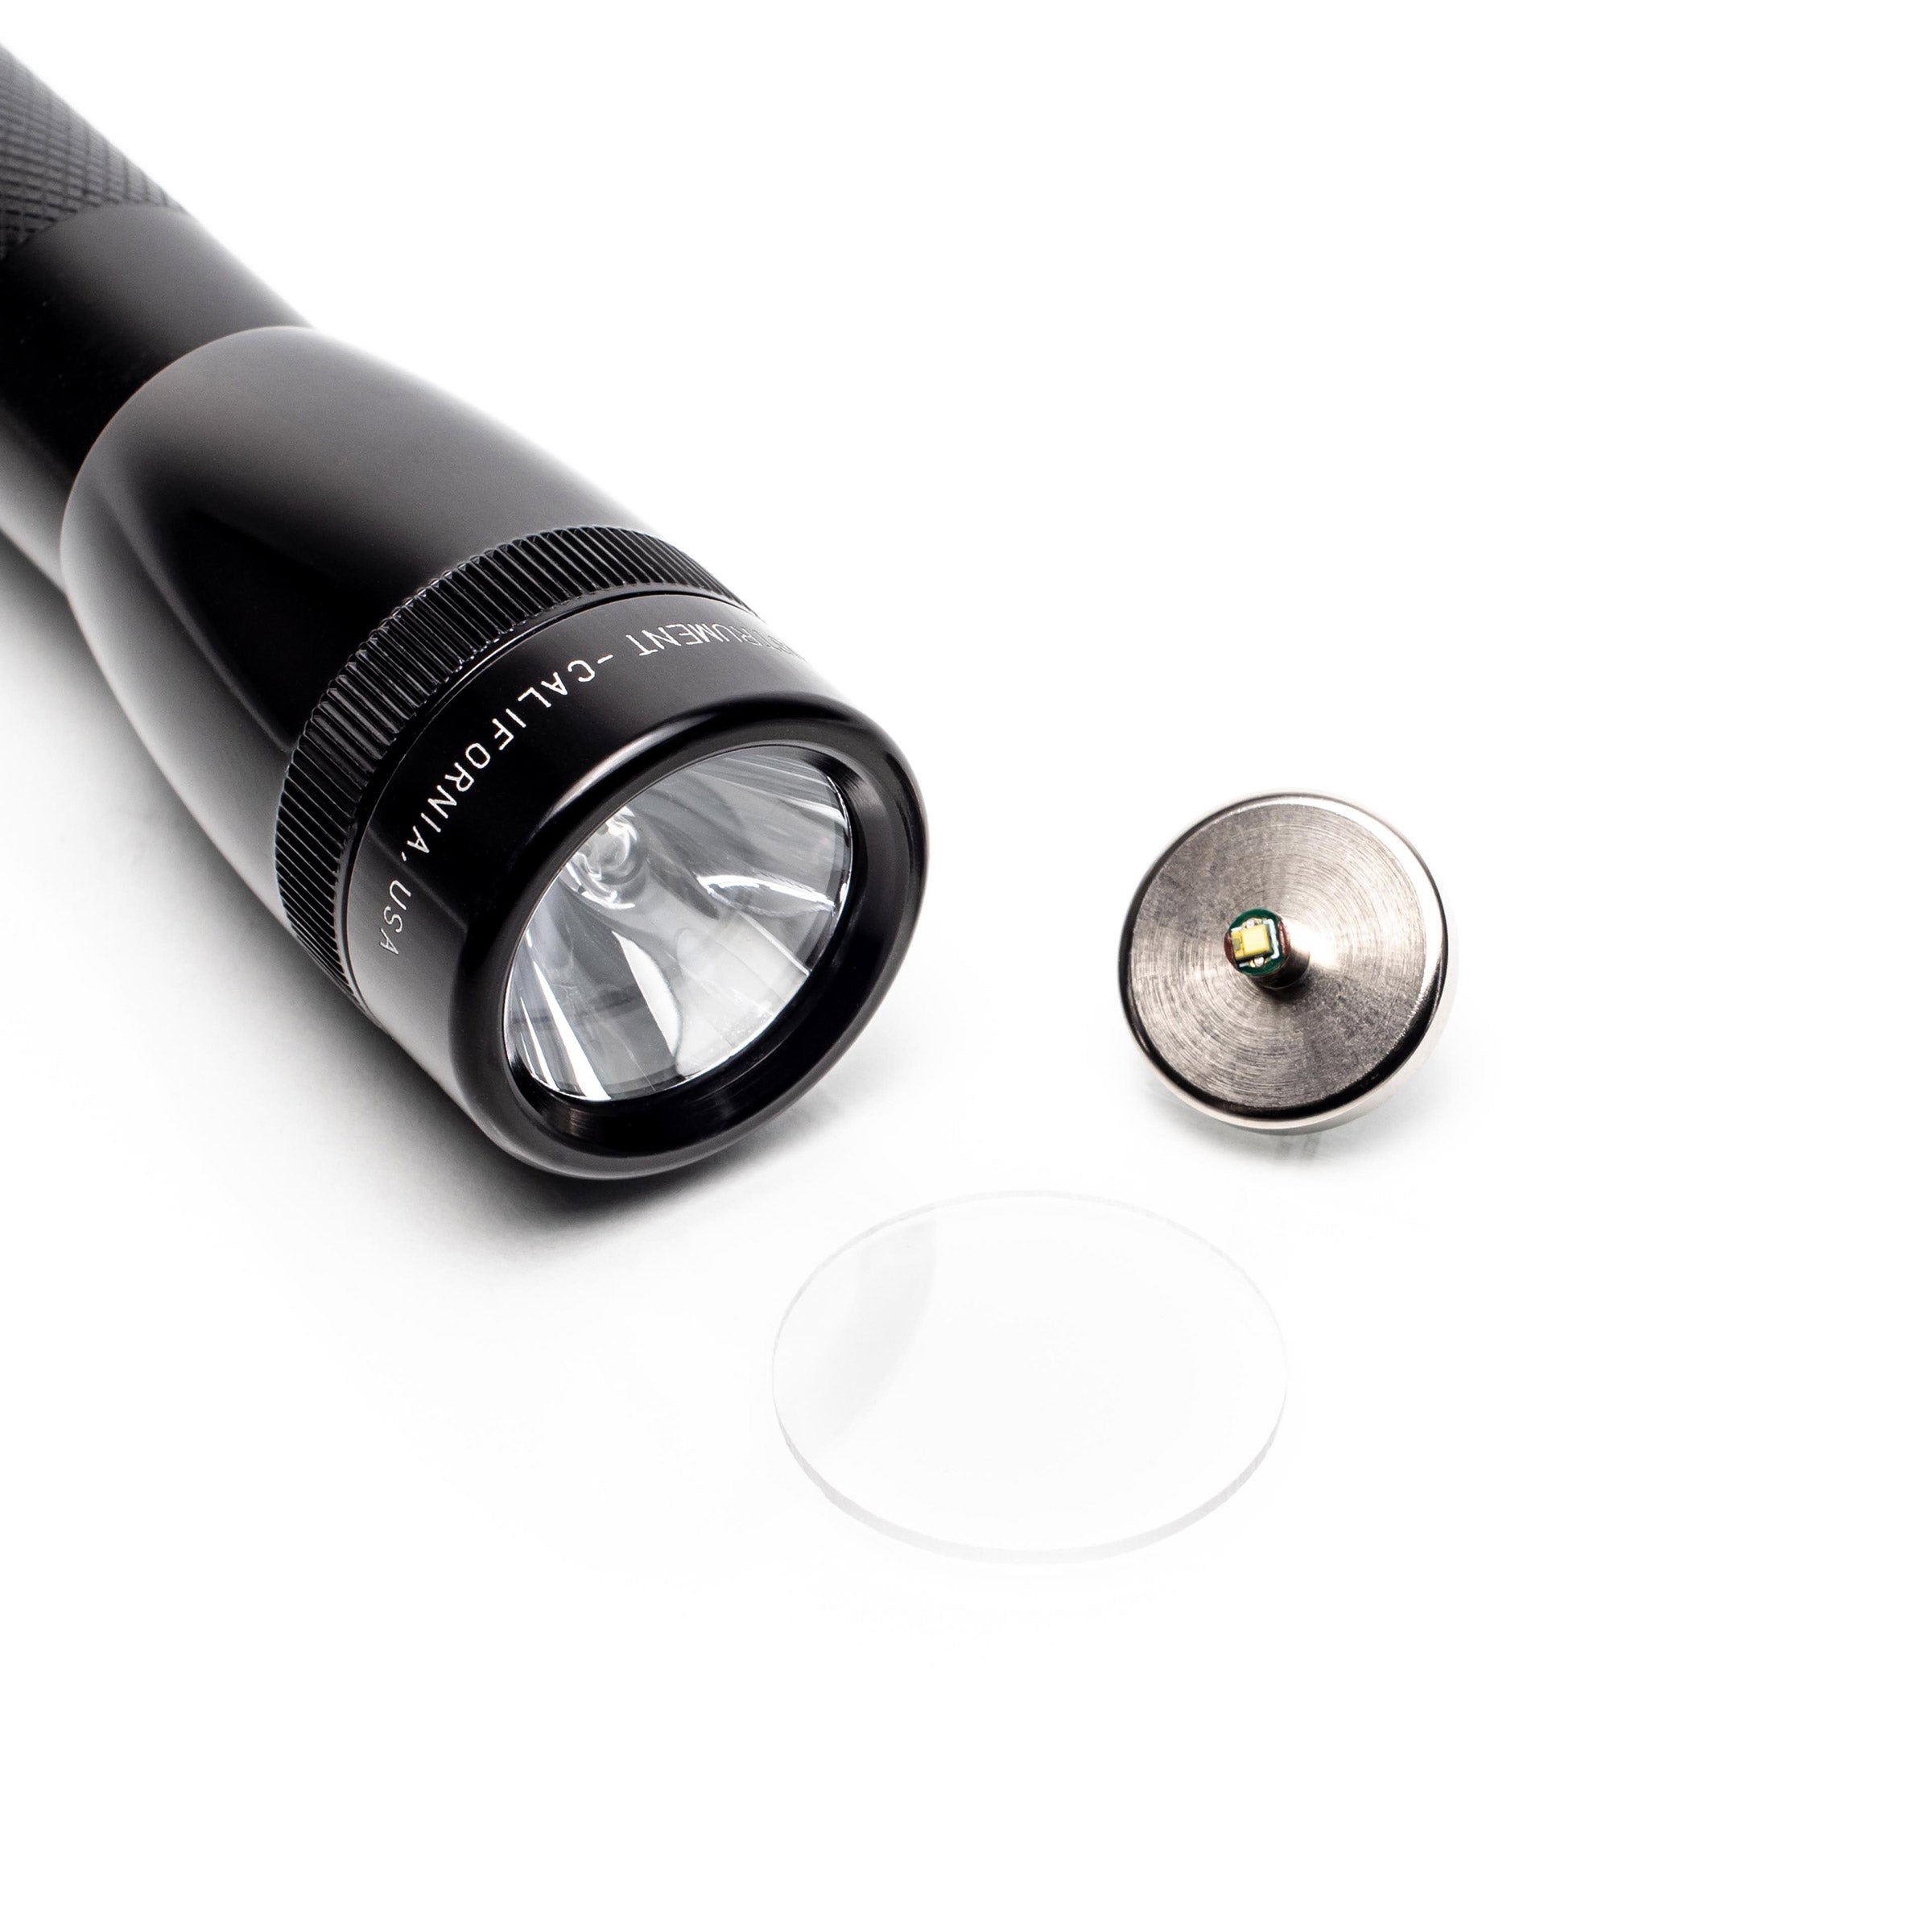 Playful At interagere Effektiv Litt Industries 2AA LED & Lens Upgrade for Mini Maglites